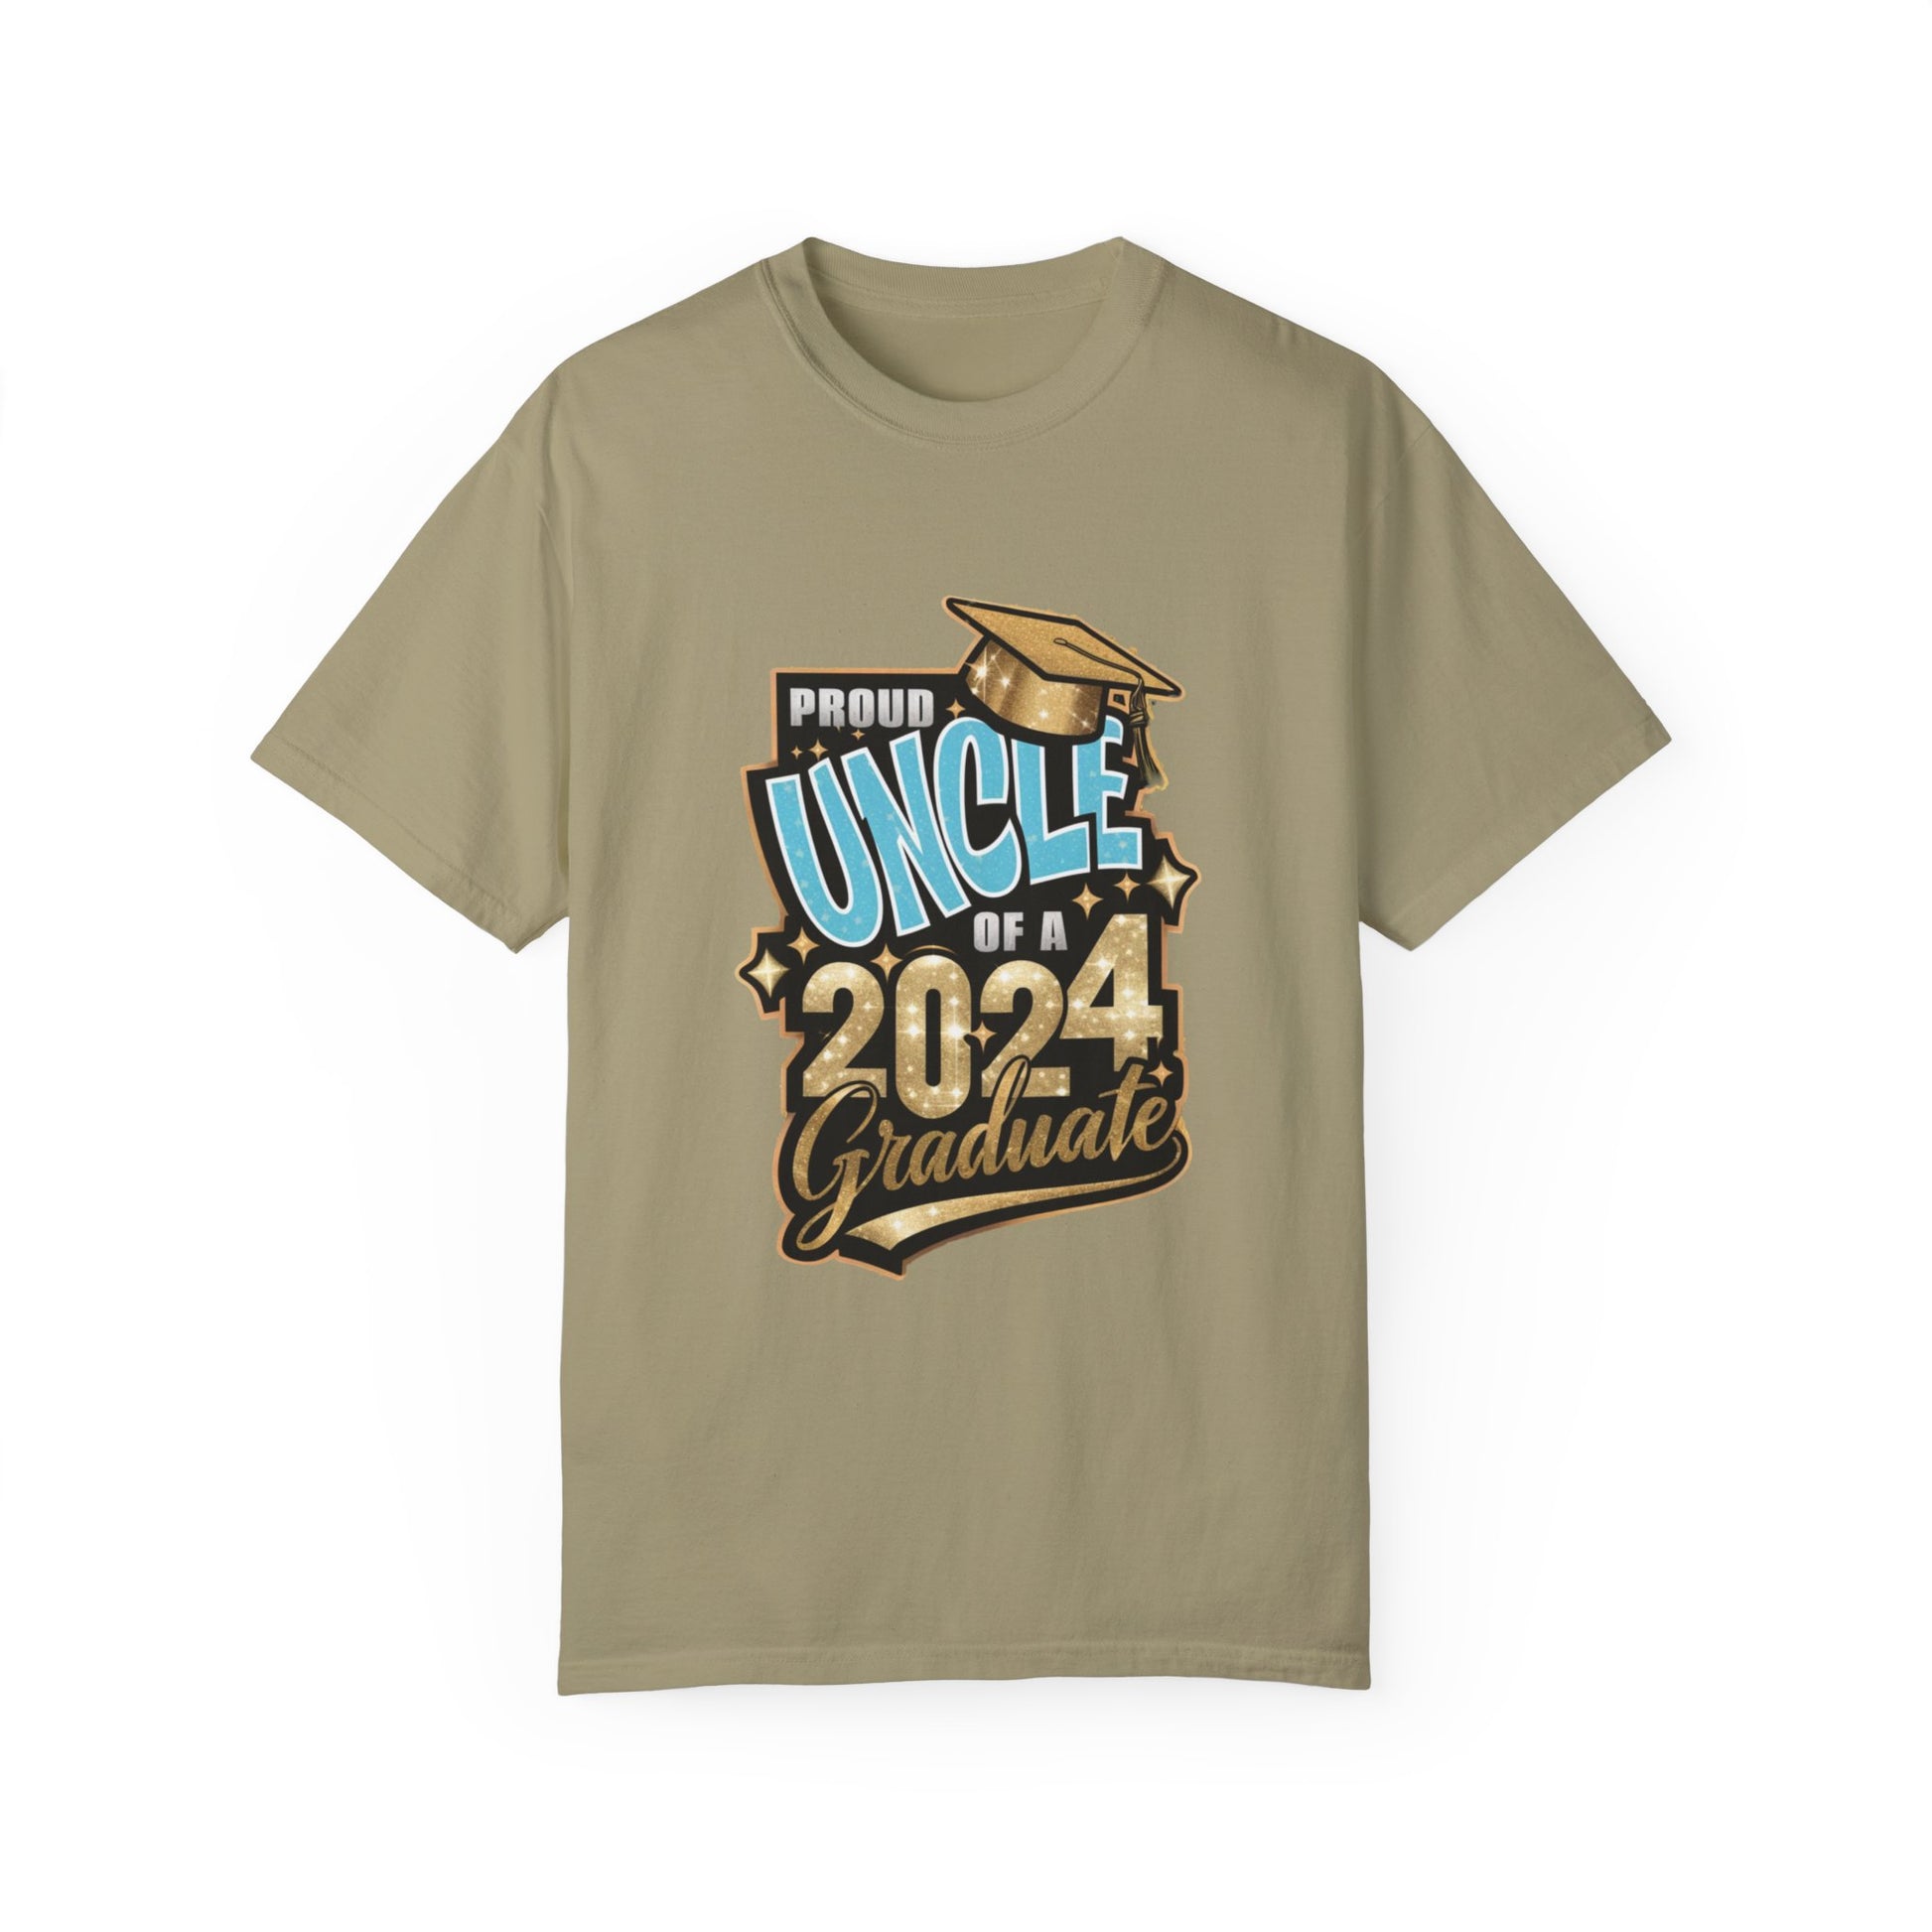 Proud Uncle of a 2024 Graduate Unisex Garment-dyed T-shirt Cotton Funny Humorous Graphic Soft Premium Unisex Men Women Khaki T-shirt Birthday Gift-11